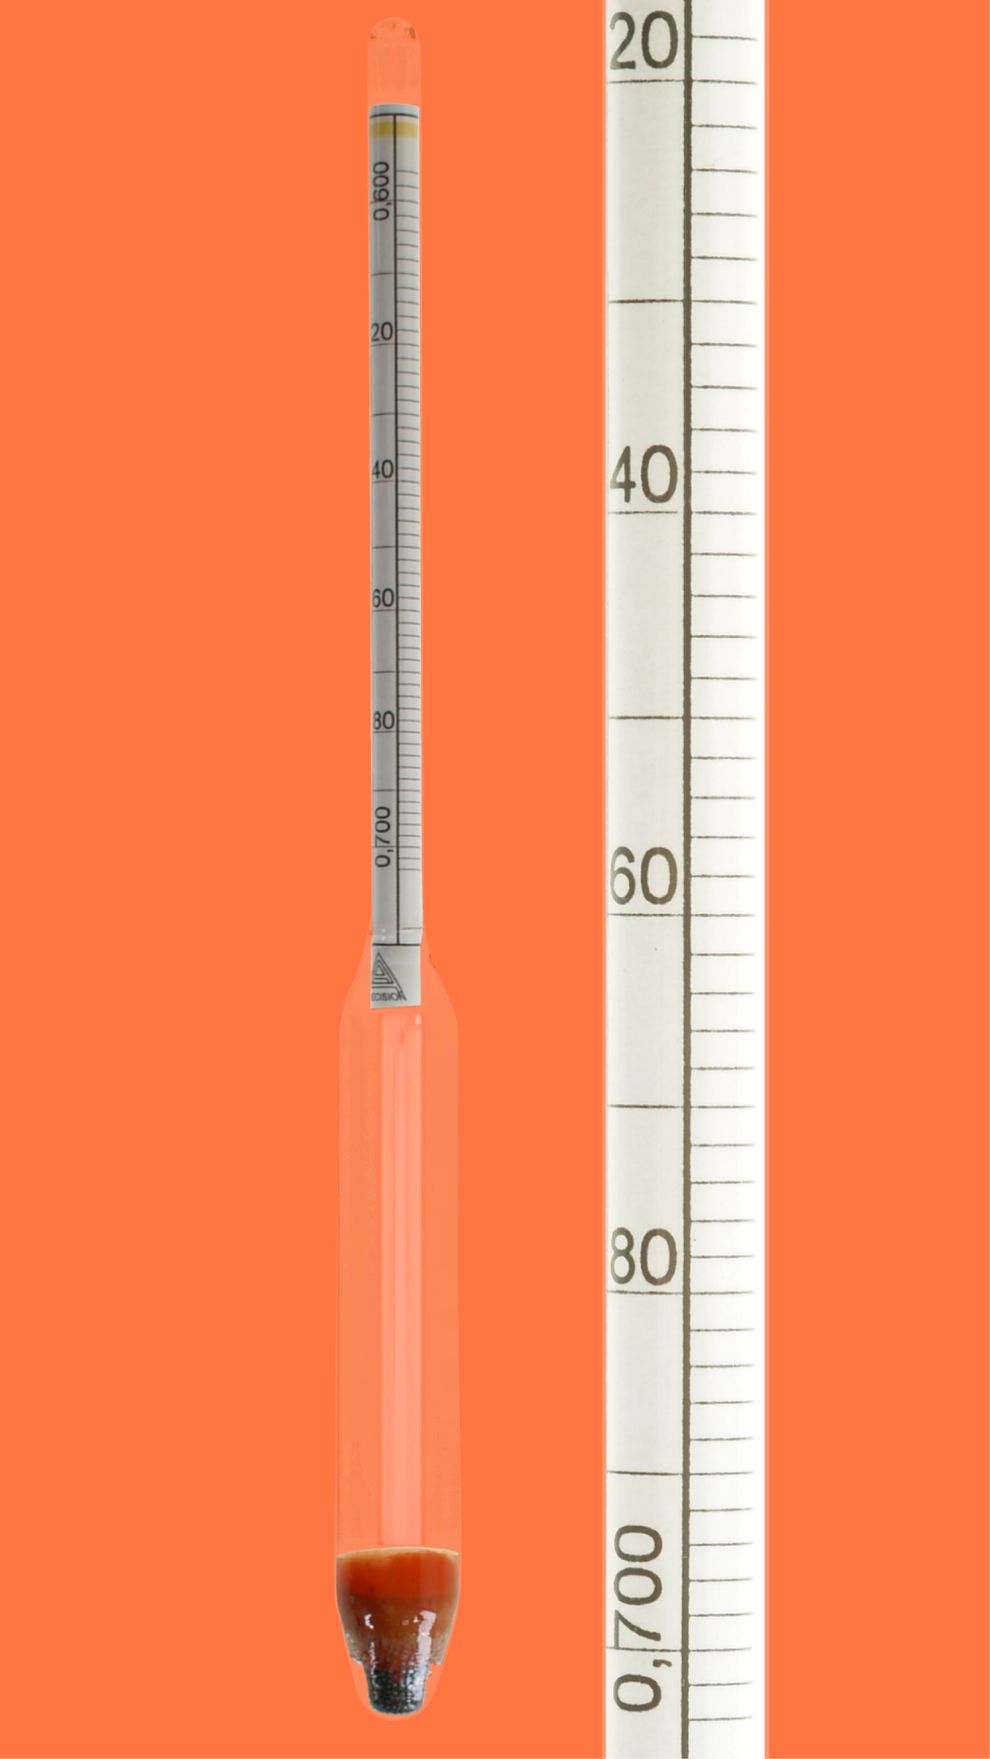 Aräometer, DIN 12791, M100, 1,60-1,70:0,0020g/cm³, Bezugstemp. 20°C, ohne Thermometer